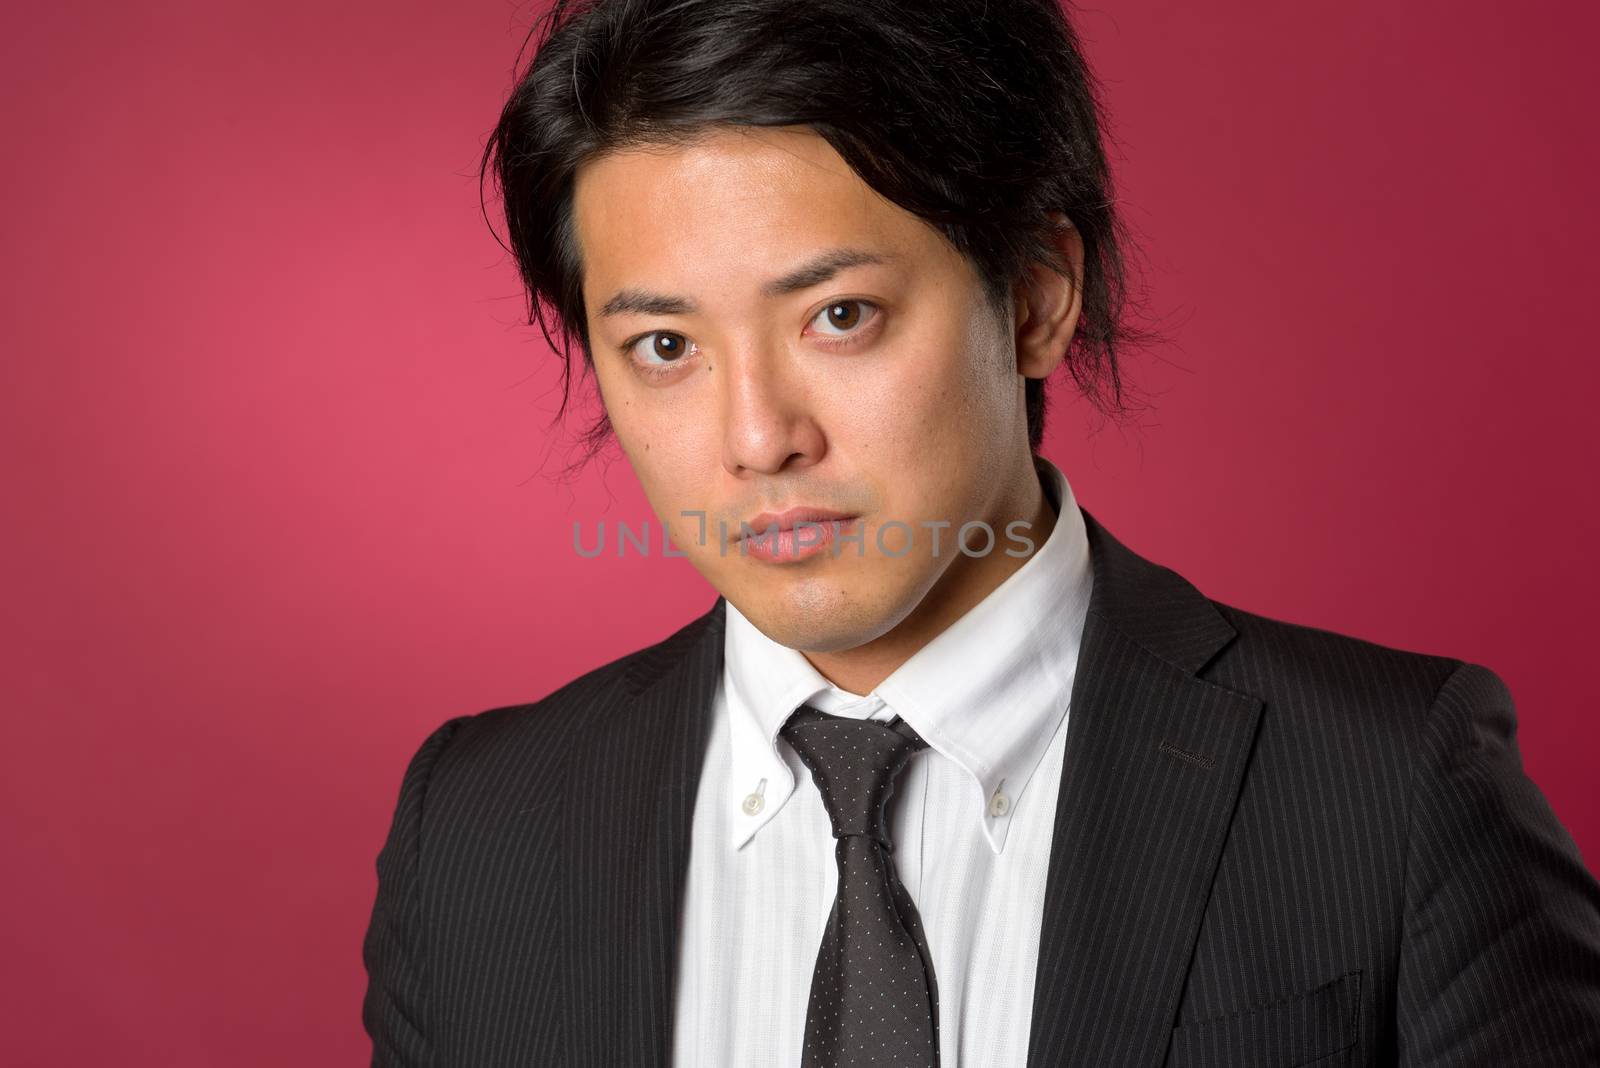 Asian Male Headshot by justtscott